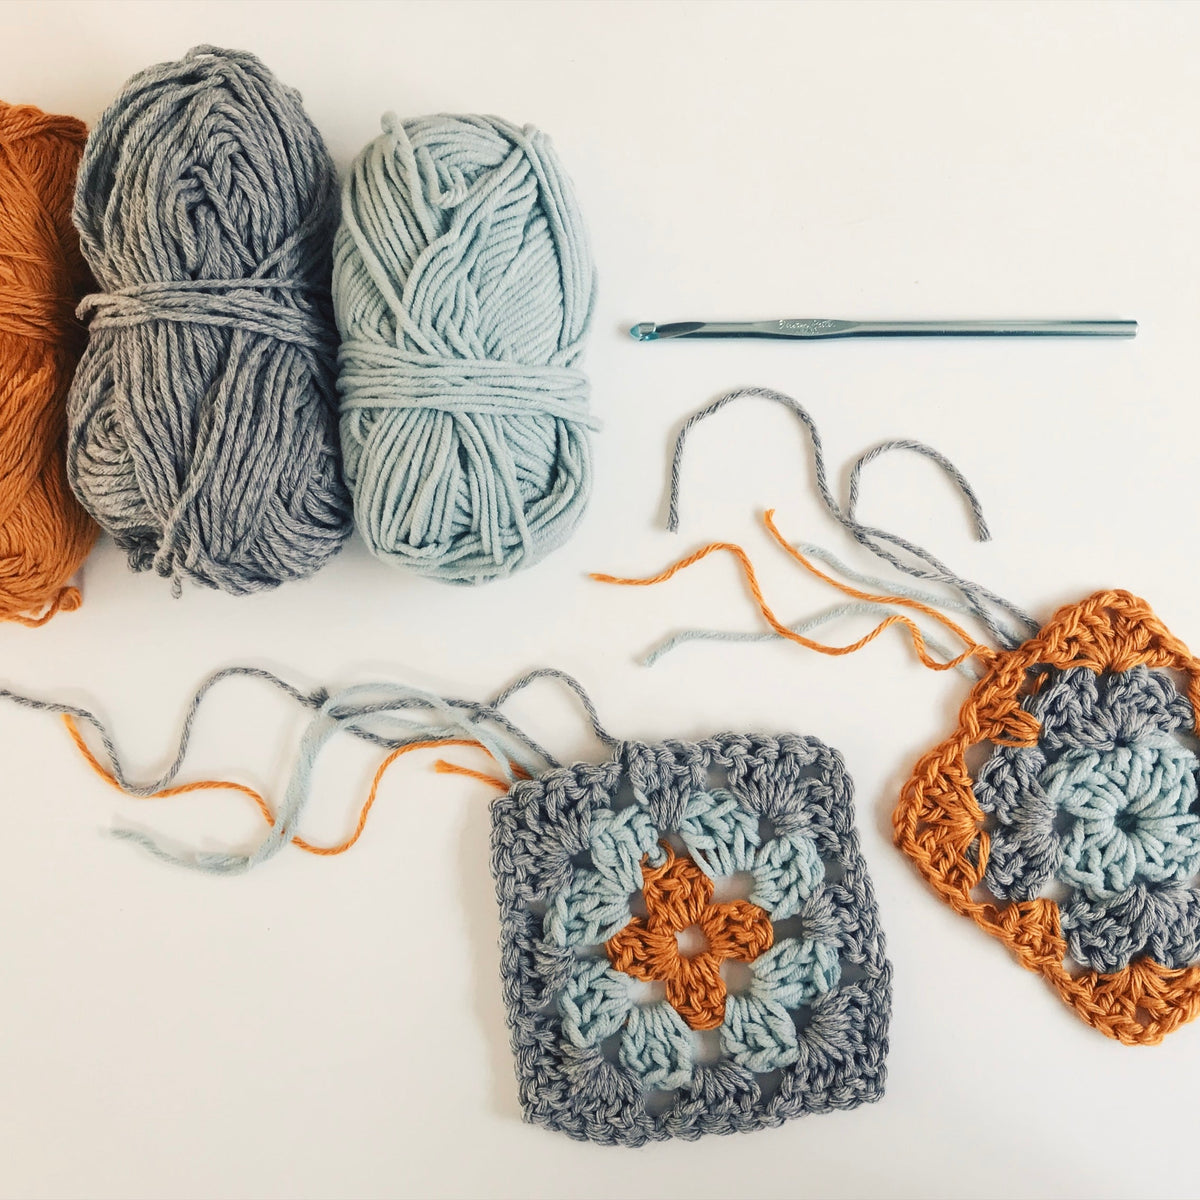 Stick & Stitch Embroidery Workshop - Seabright Crafts